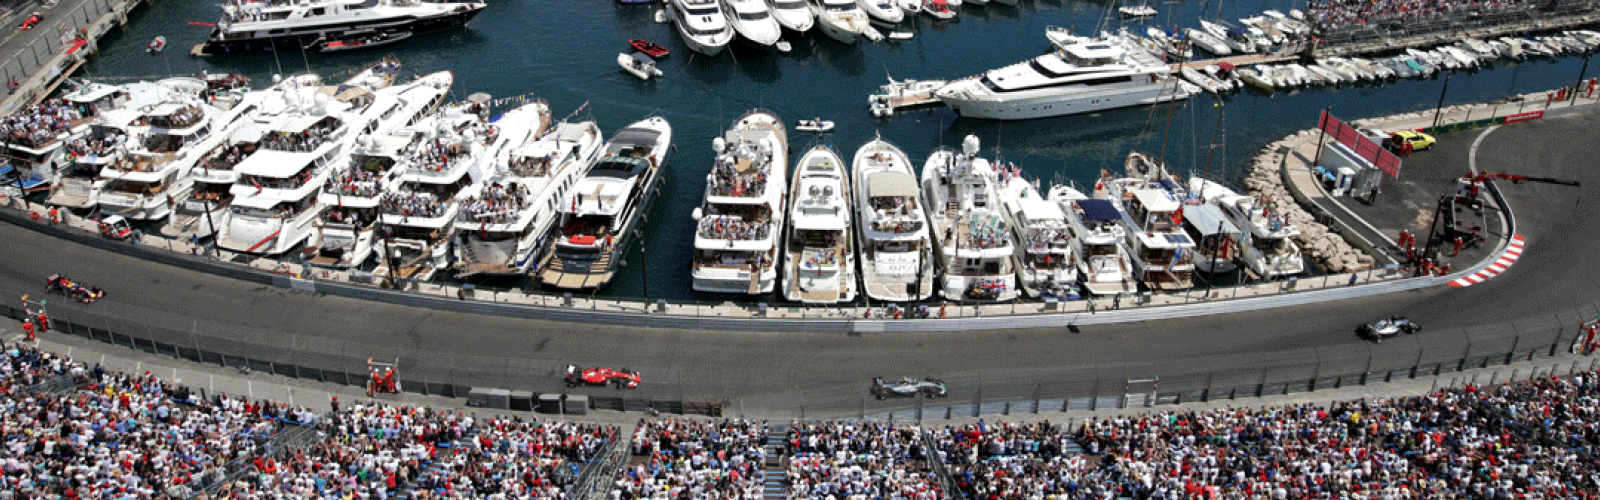 The Monaco Grand Prix is a Formula One motor racing event held annually on the Circuit de Monaco